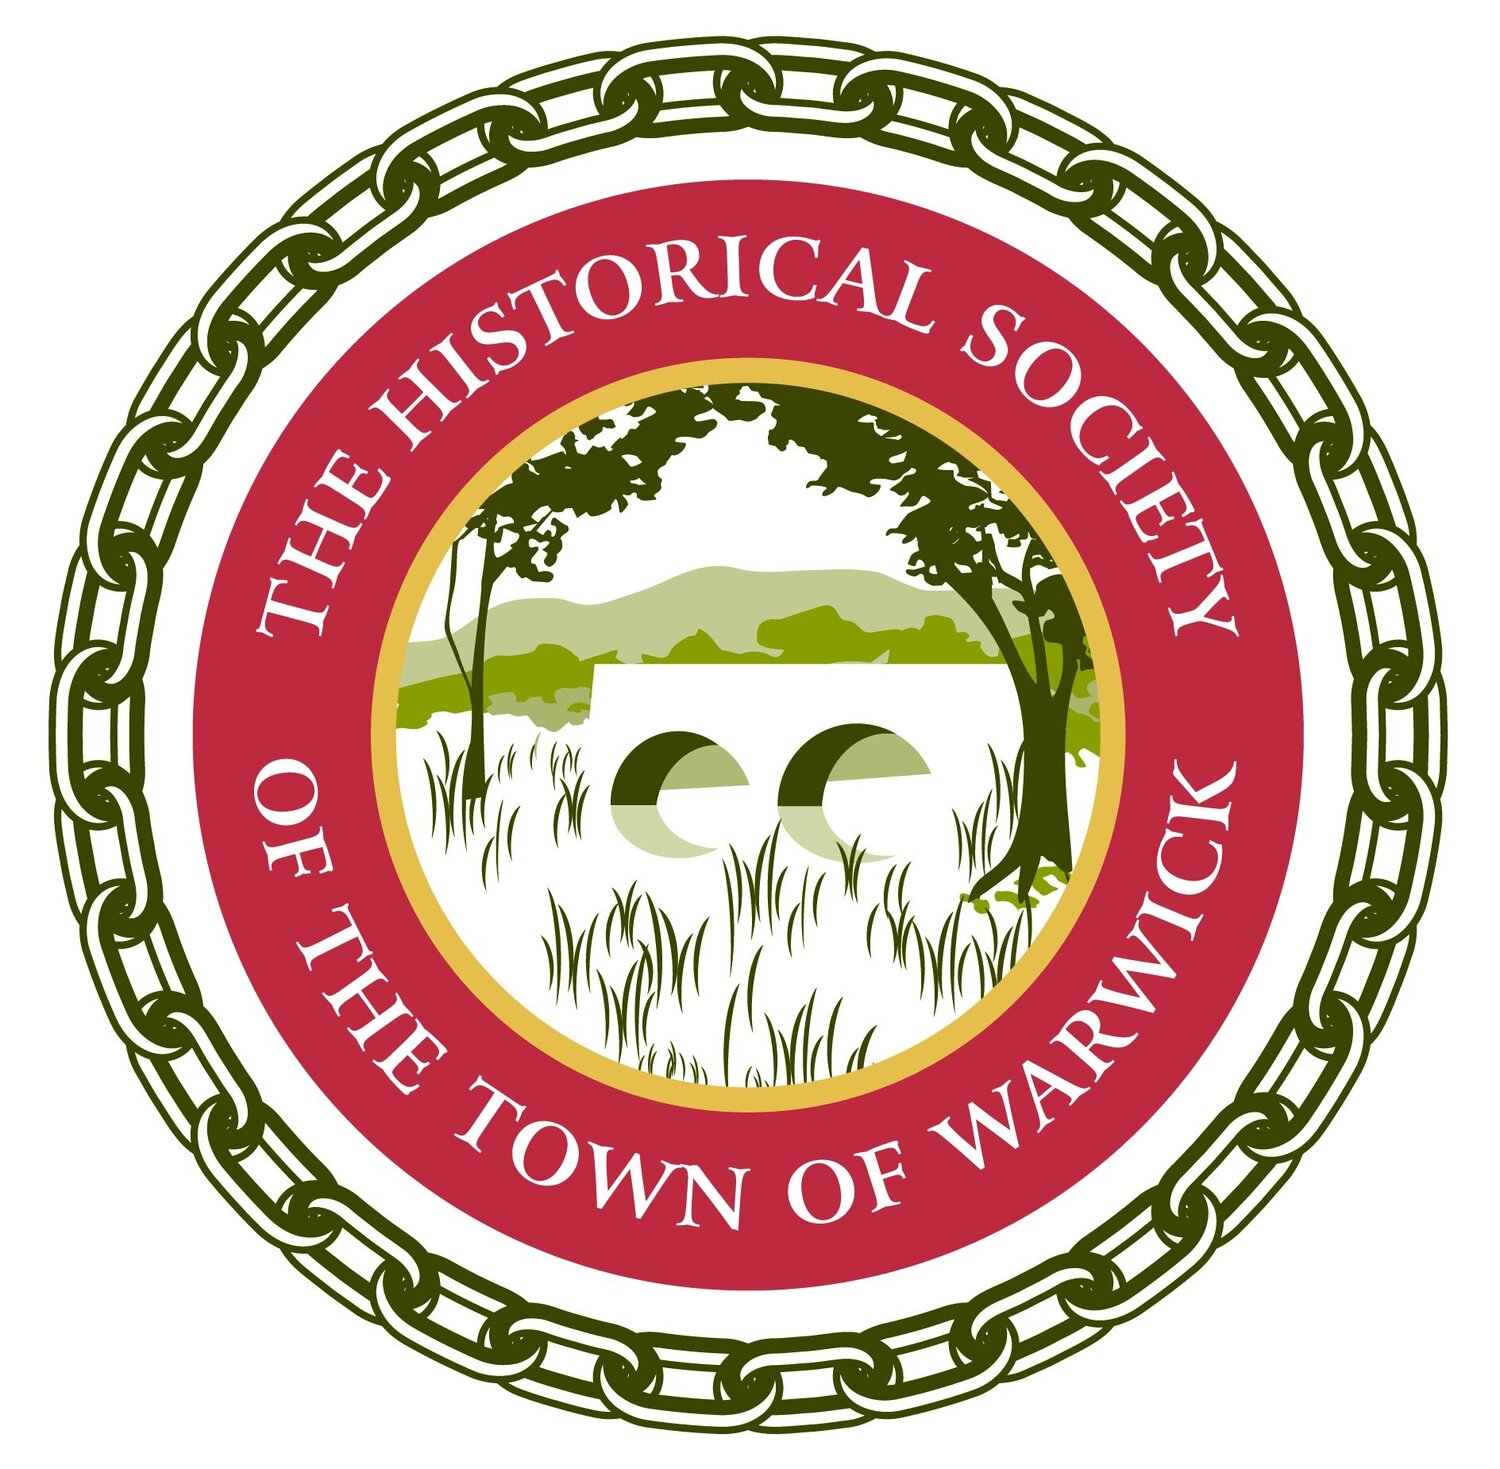 The Warwick Historical Society